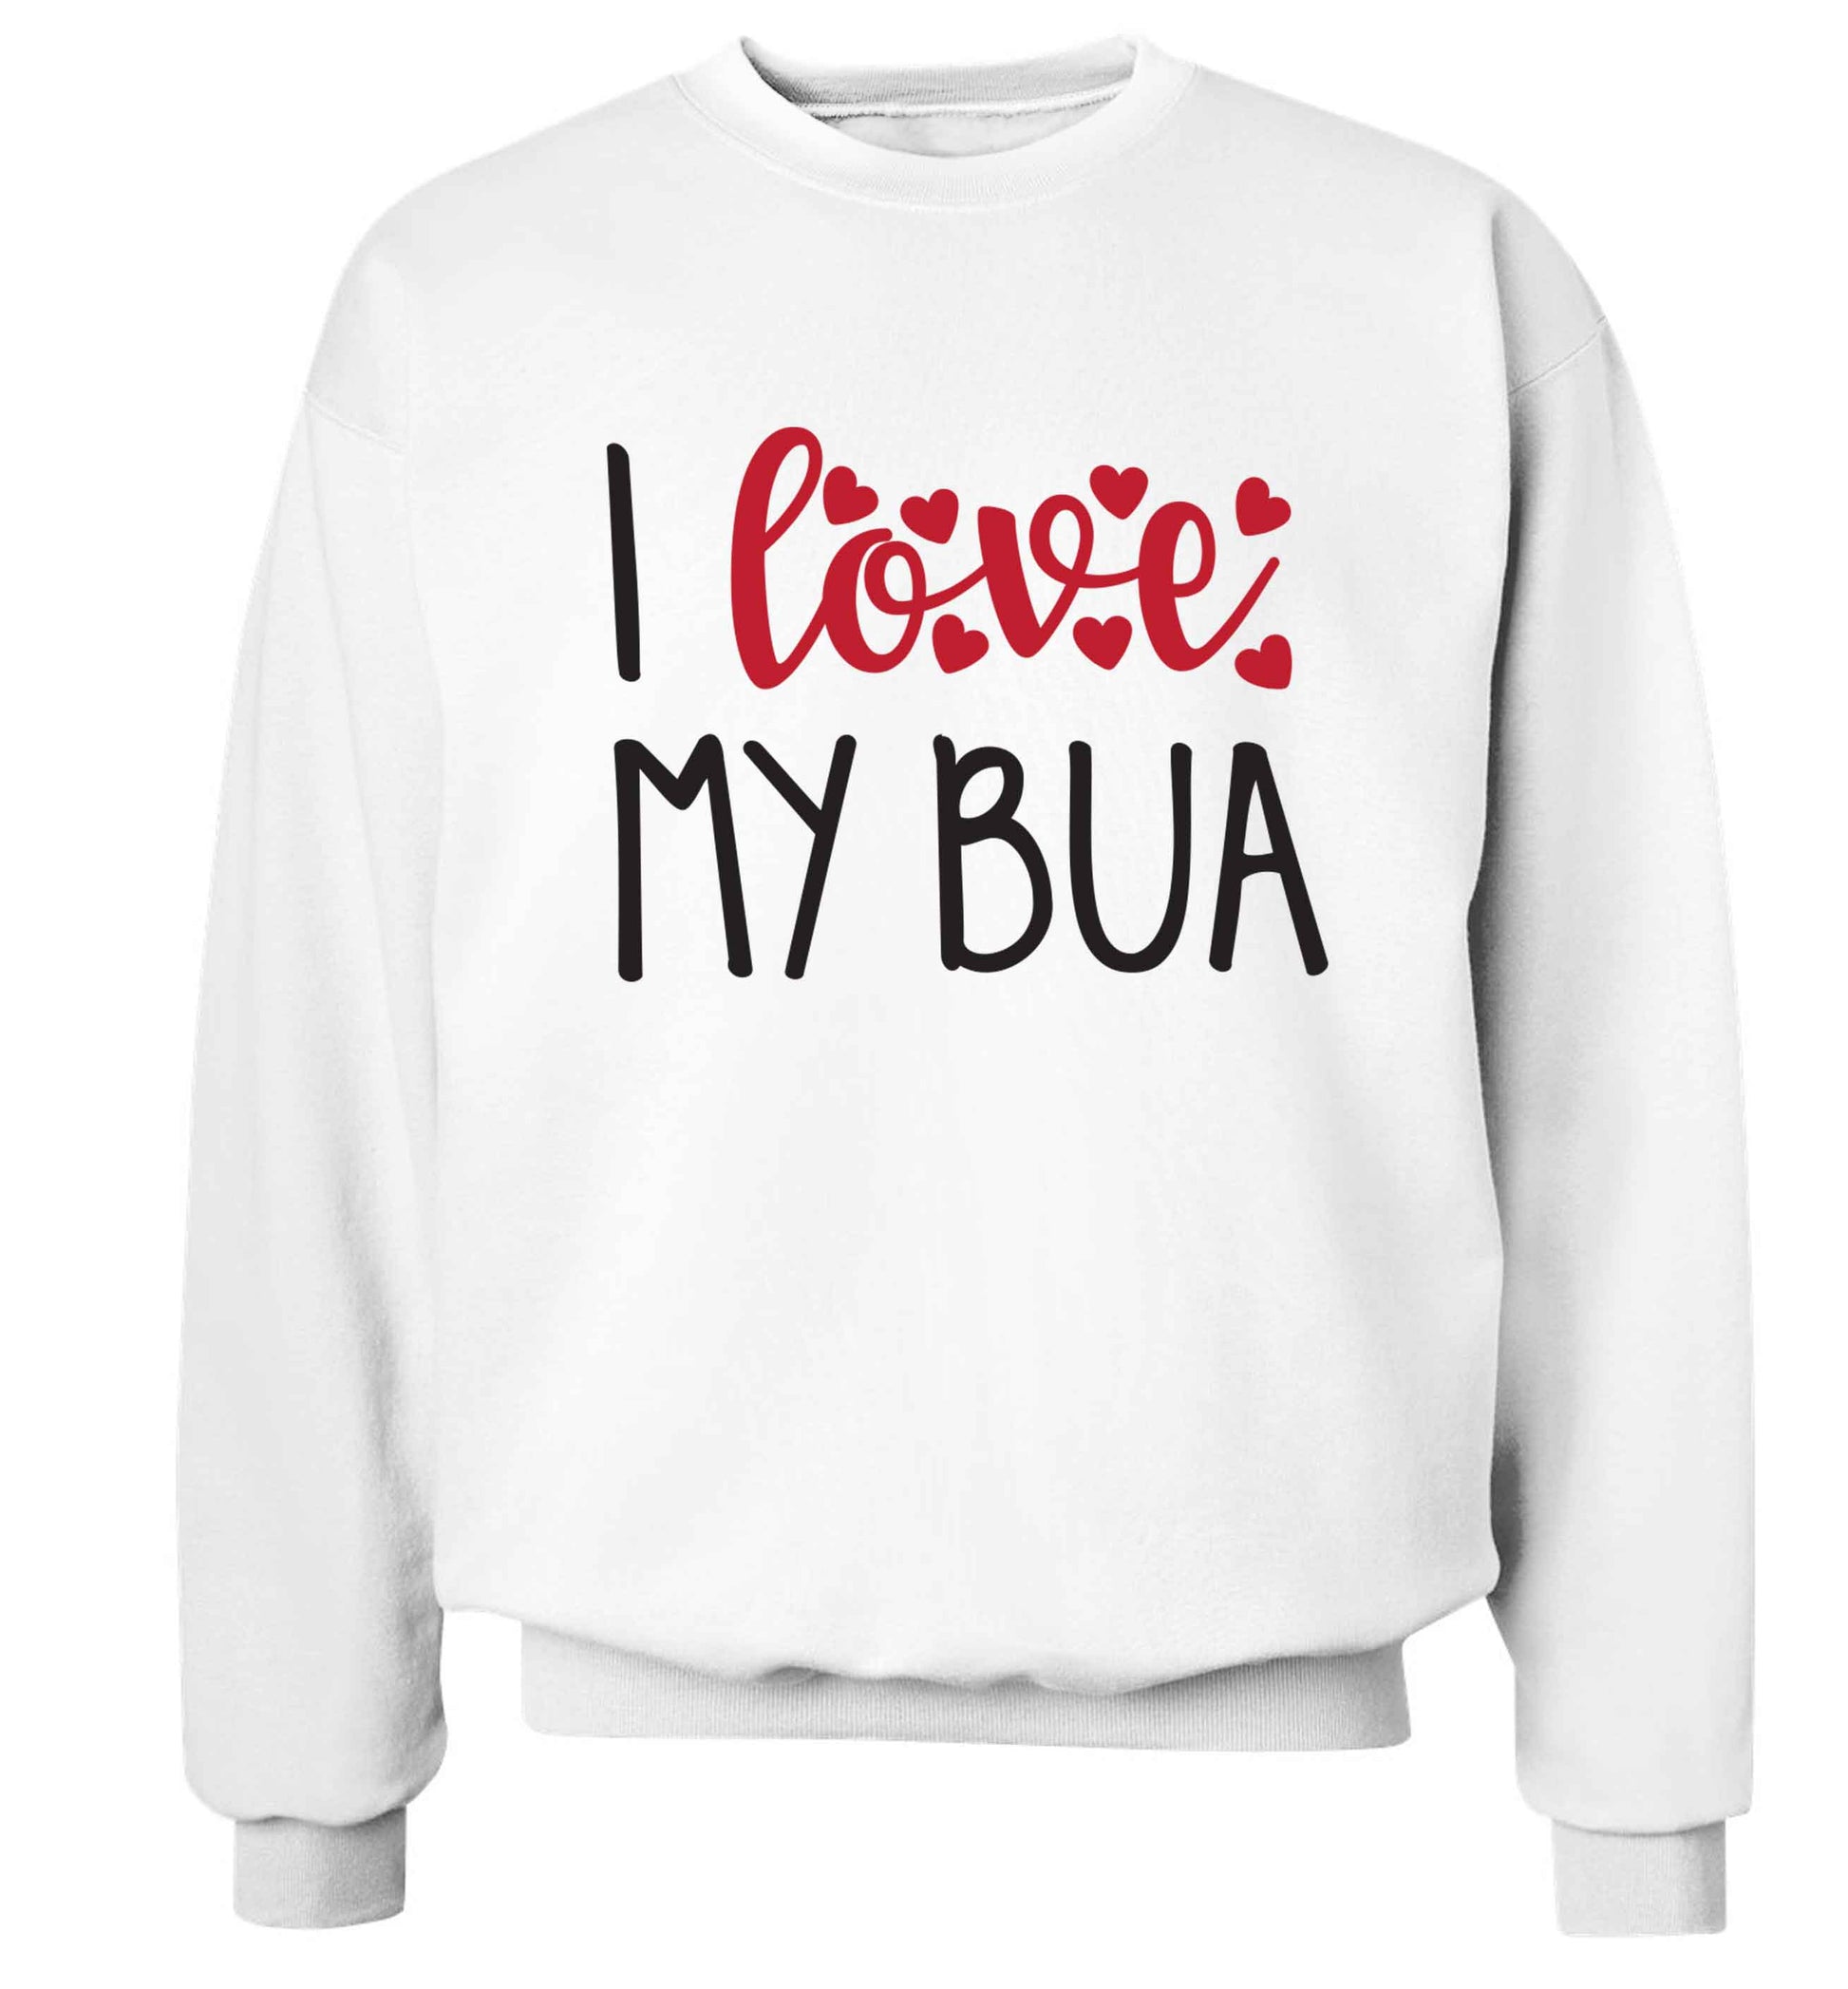 I love my bua Adult's unisex white Sweater 2XL